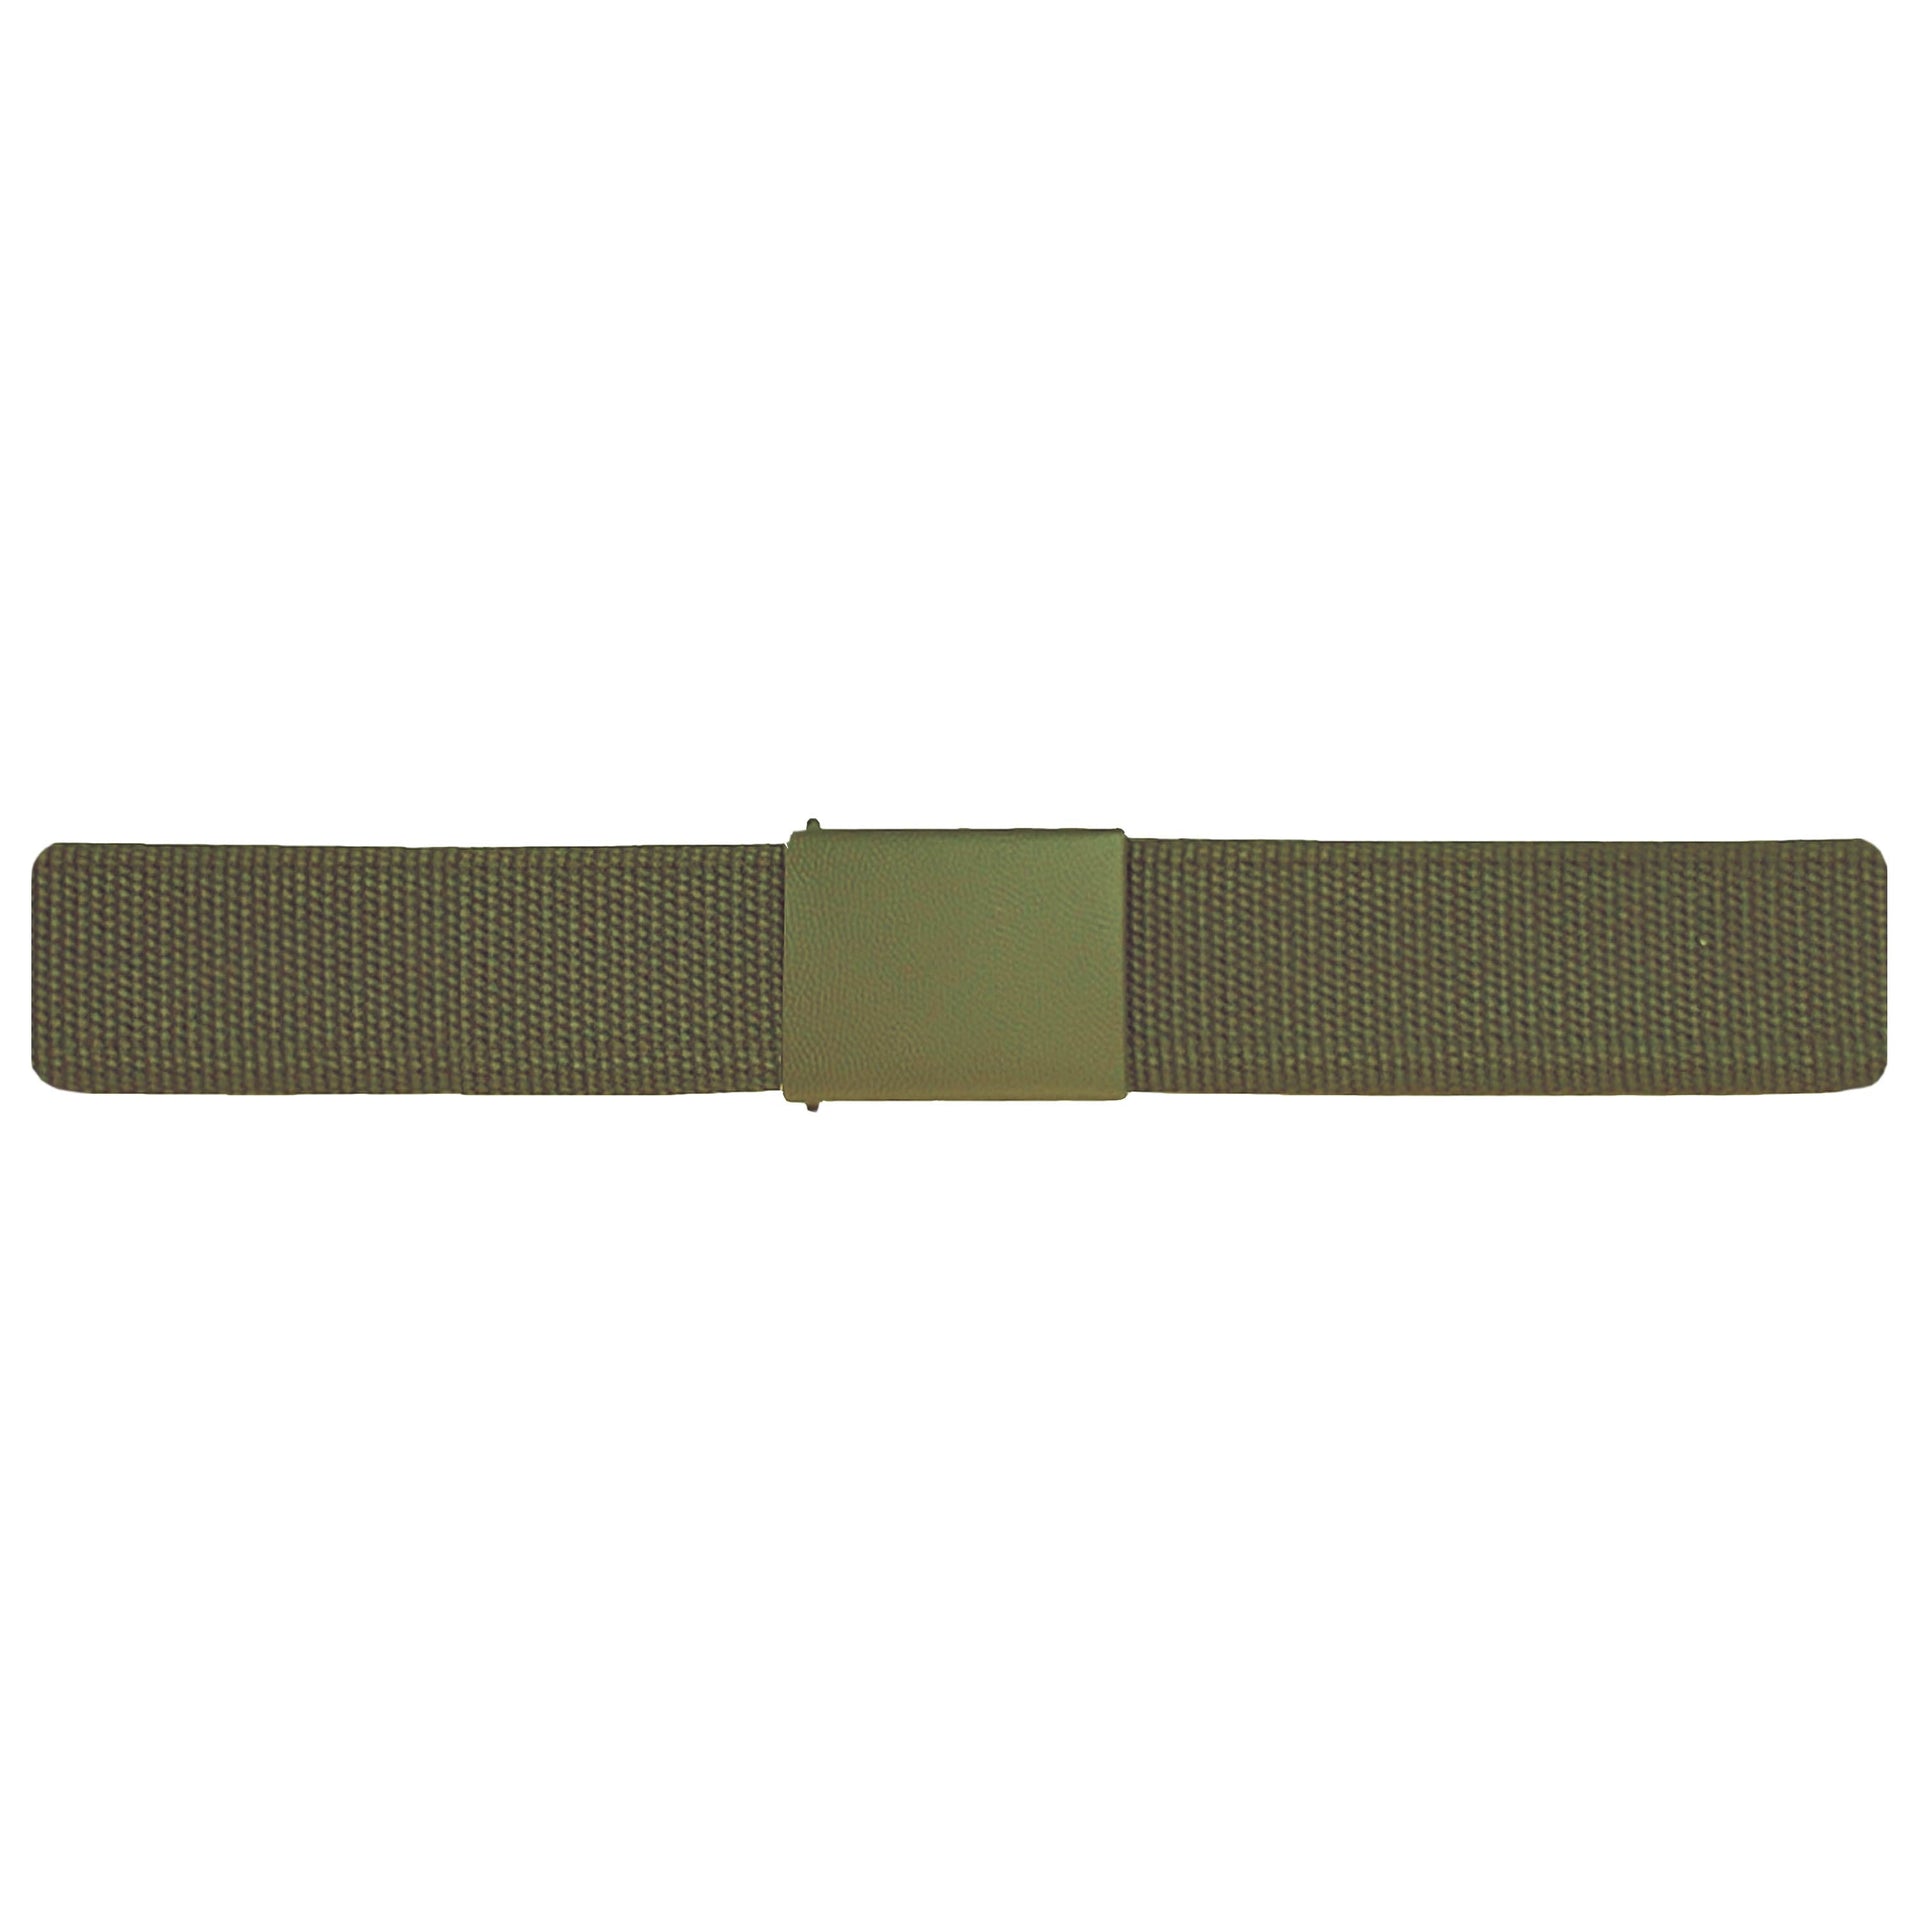 German Army Belt Textile Used